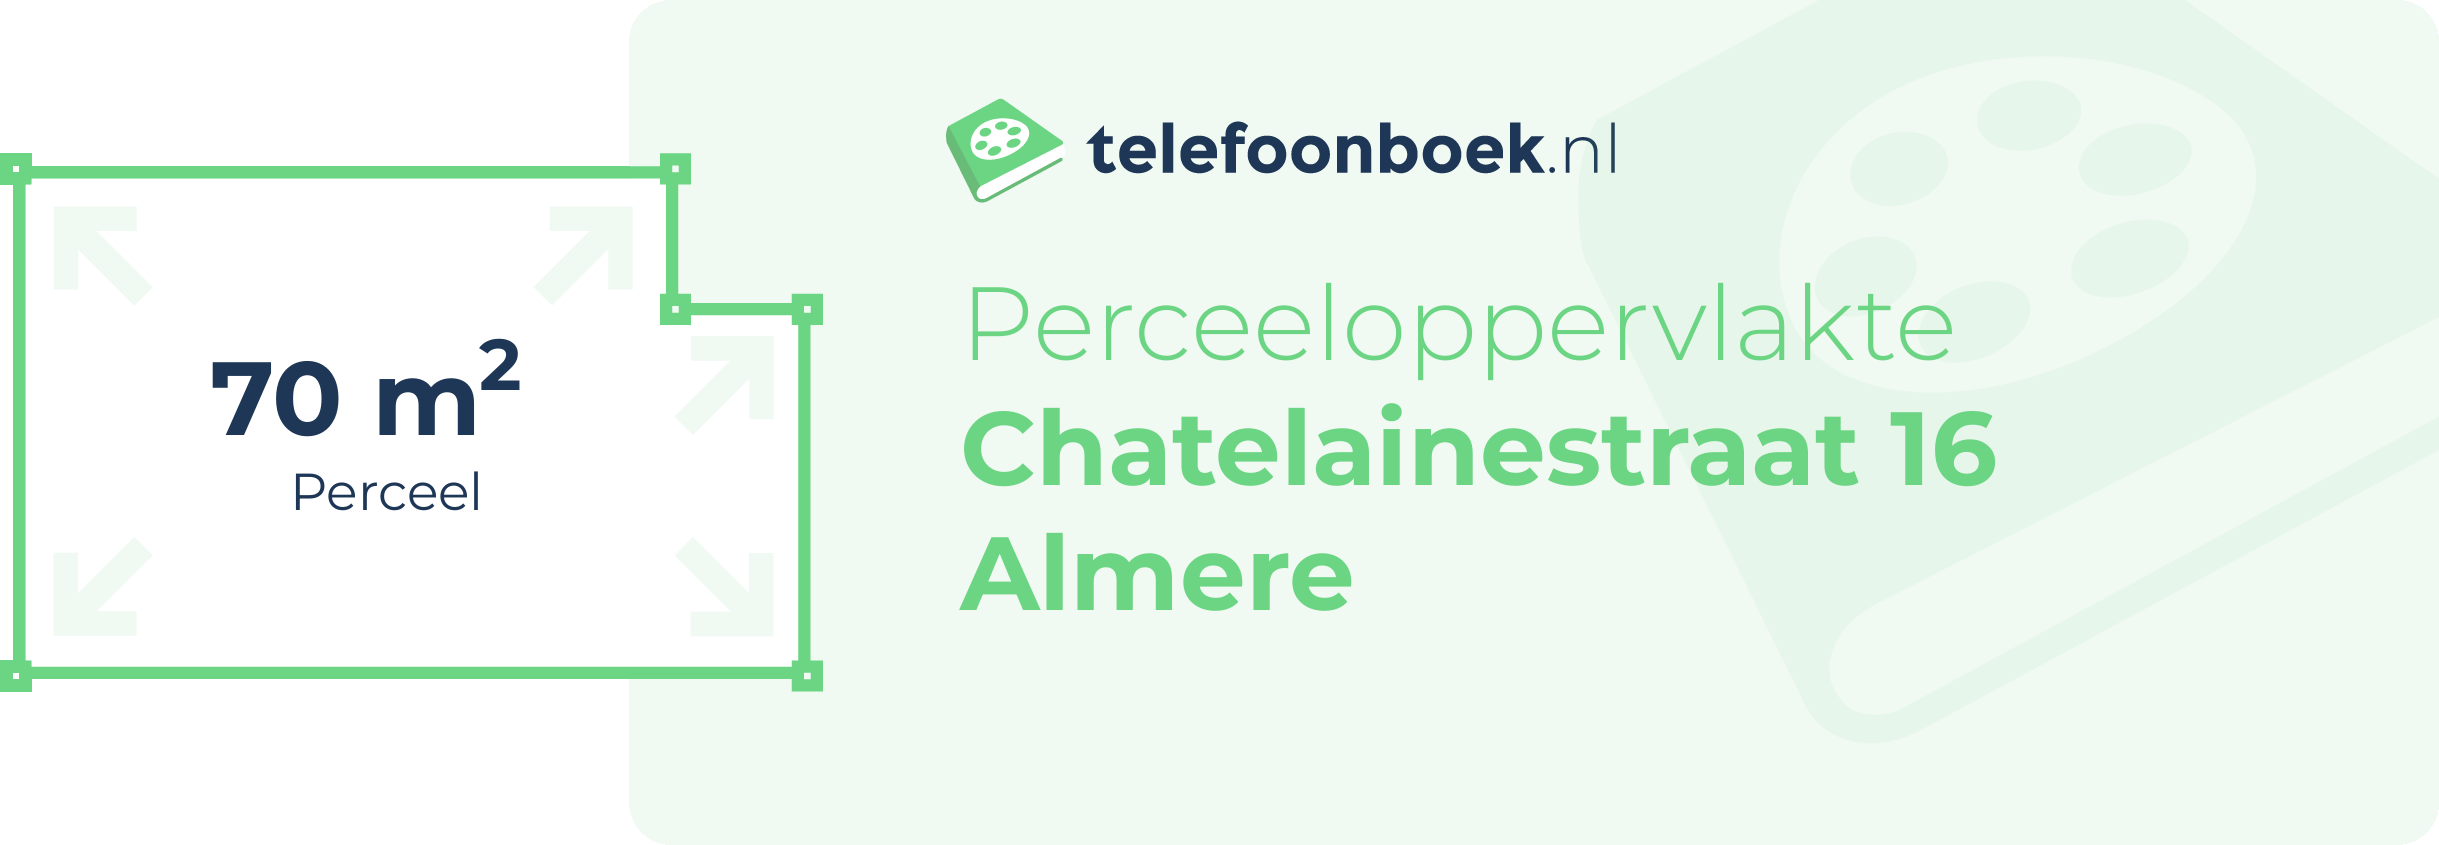 Perceeloppervlakte Chatelainestraat 16 Almere